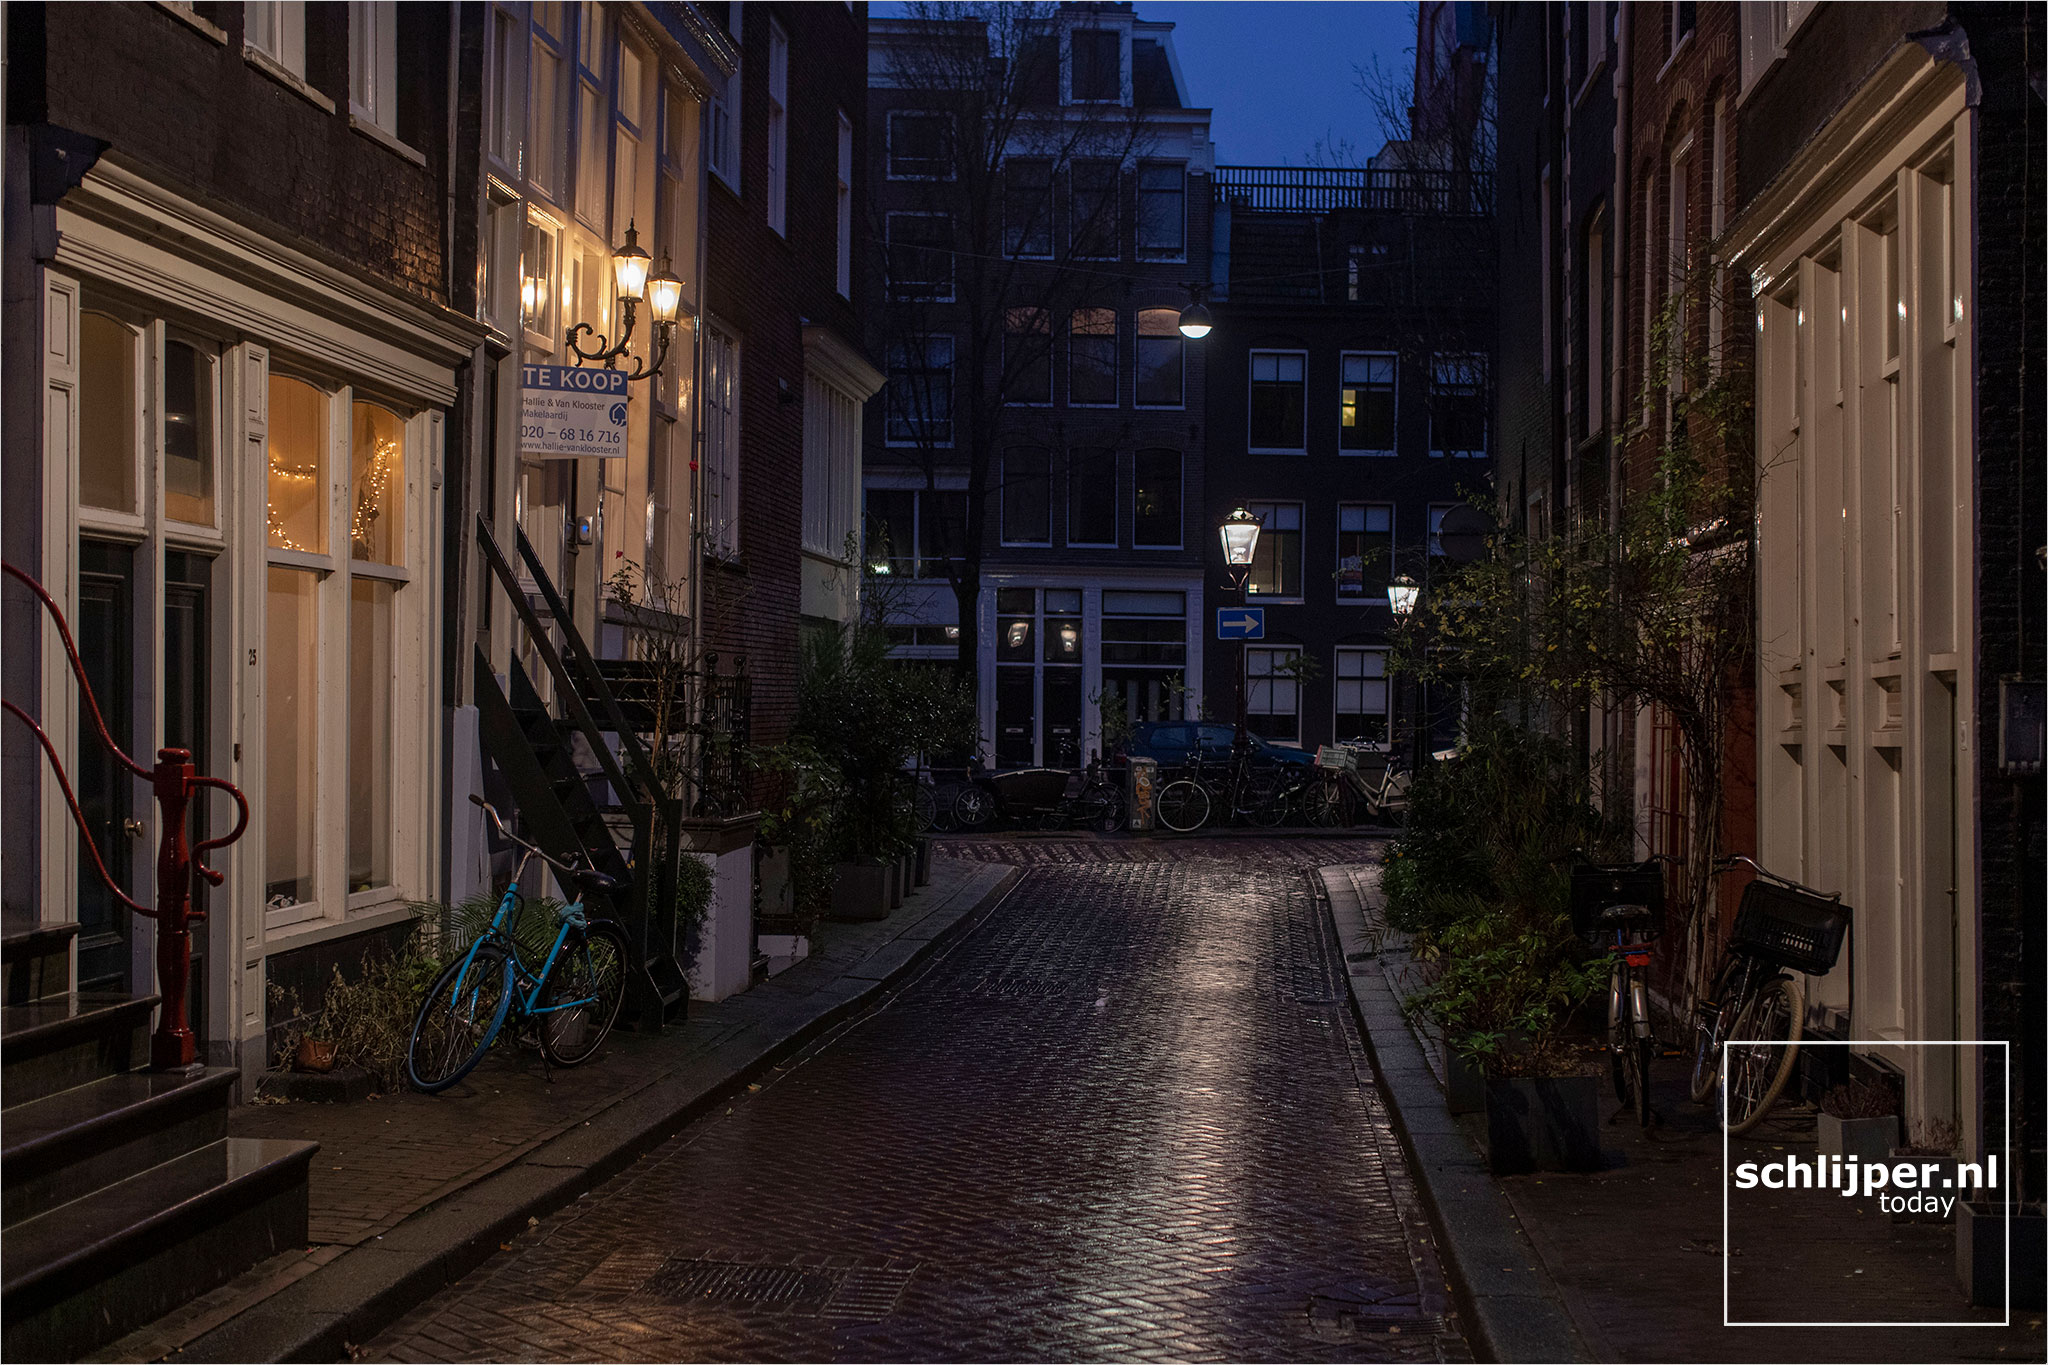 The Netherlands, Amsterdam, 11 december 2020